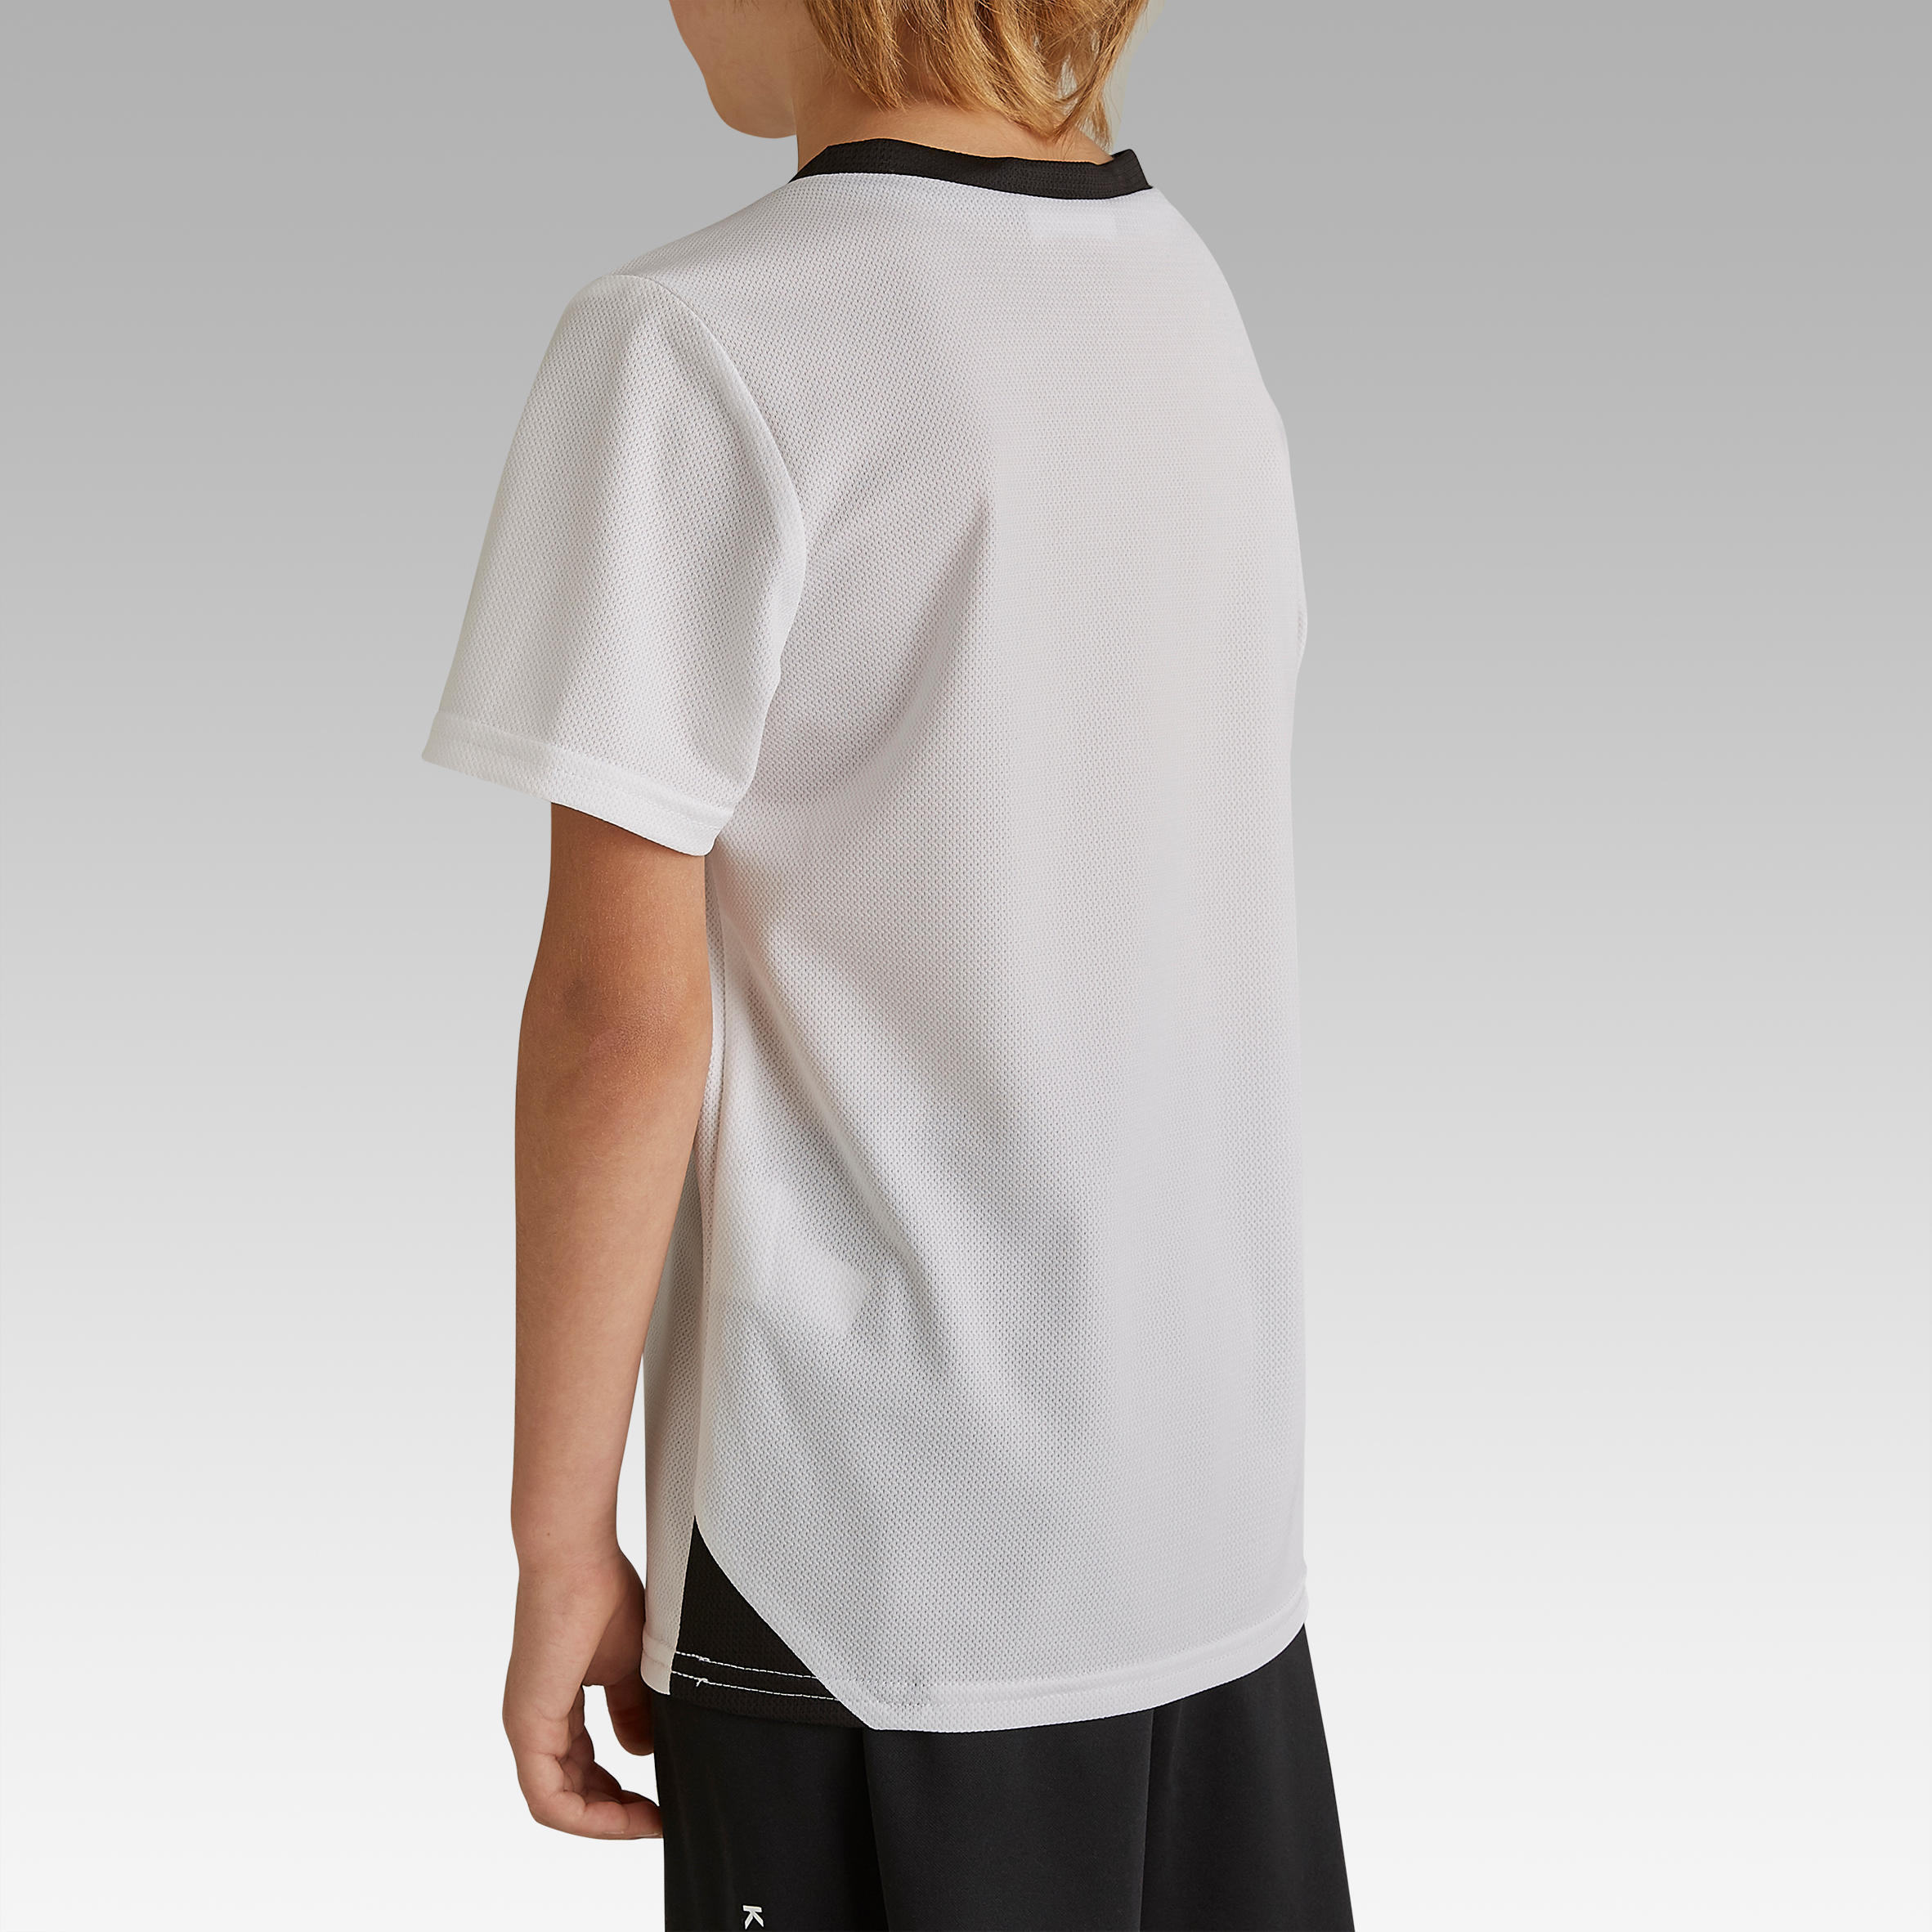 Refurbished Kids Football Shirt Essential - White - A Grade 7/7